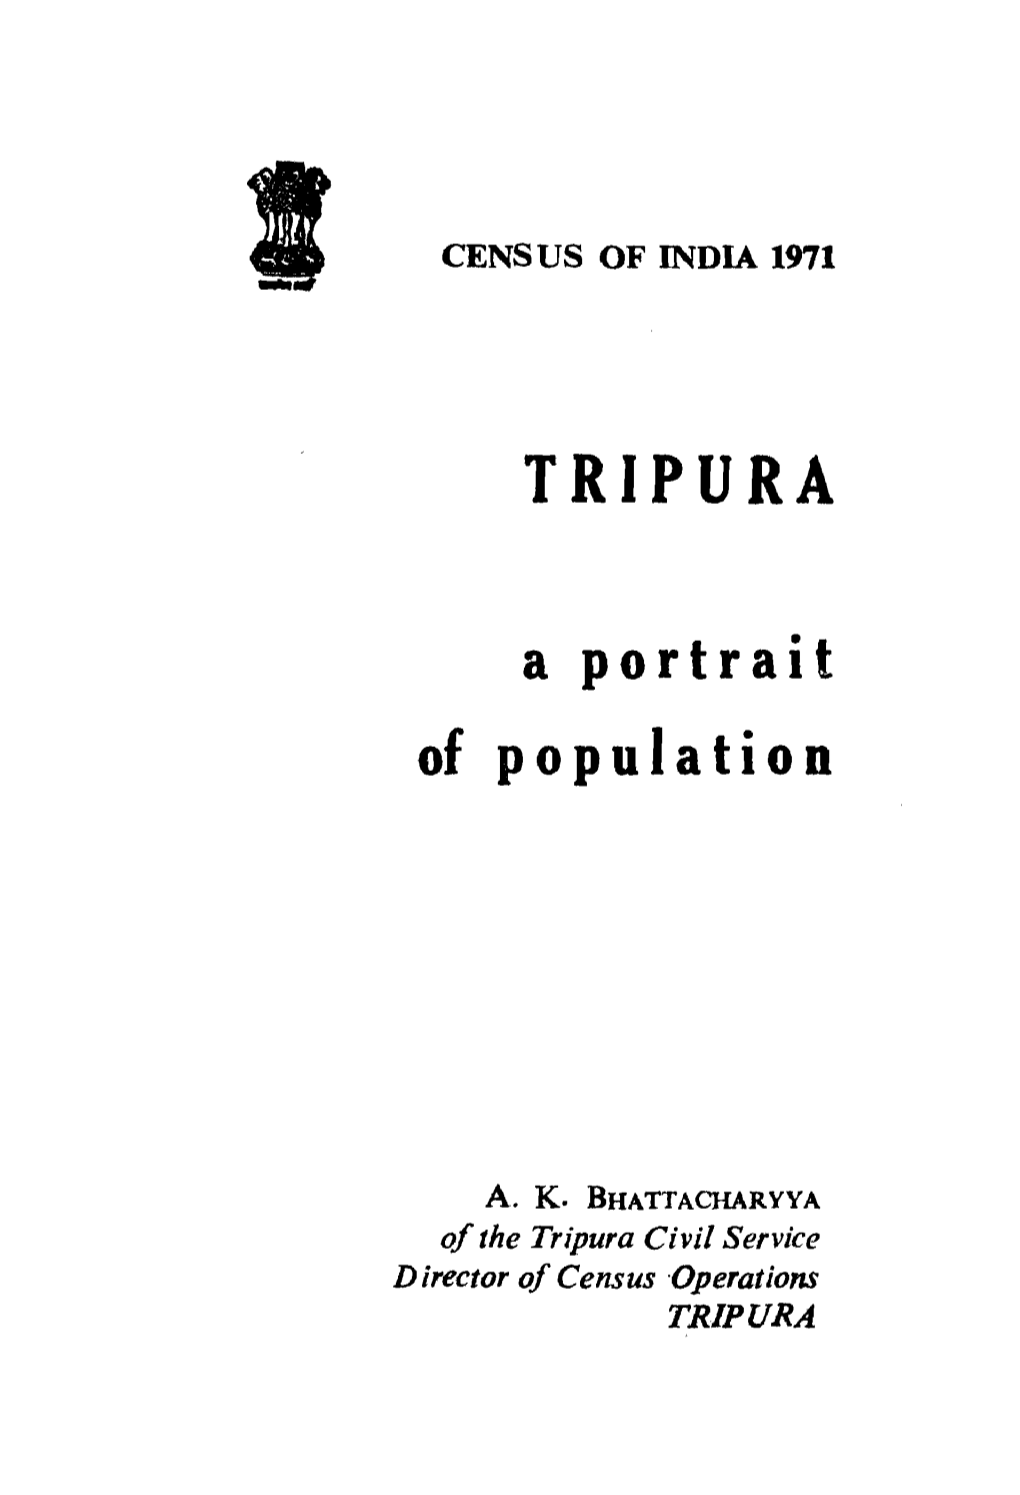 Portrait of Population, Tripura